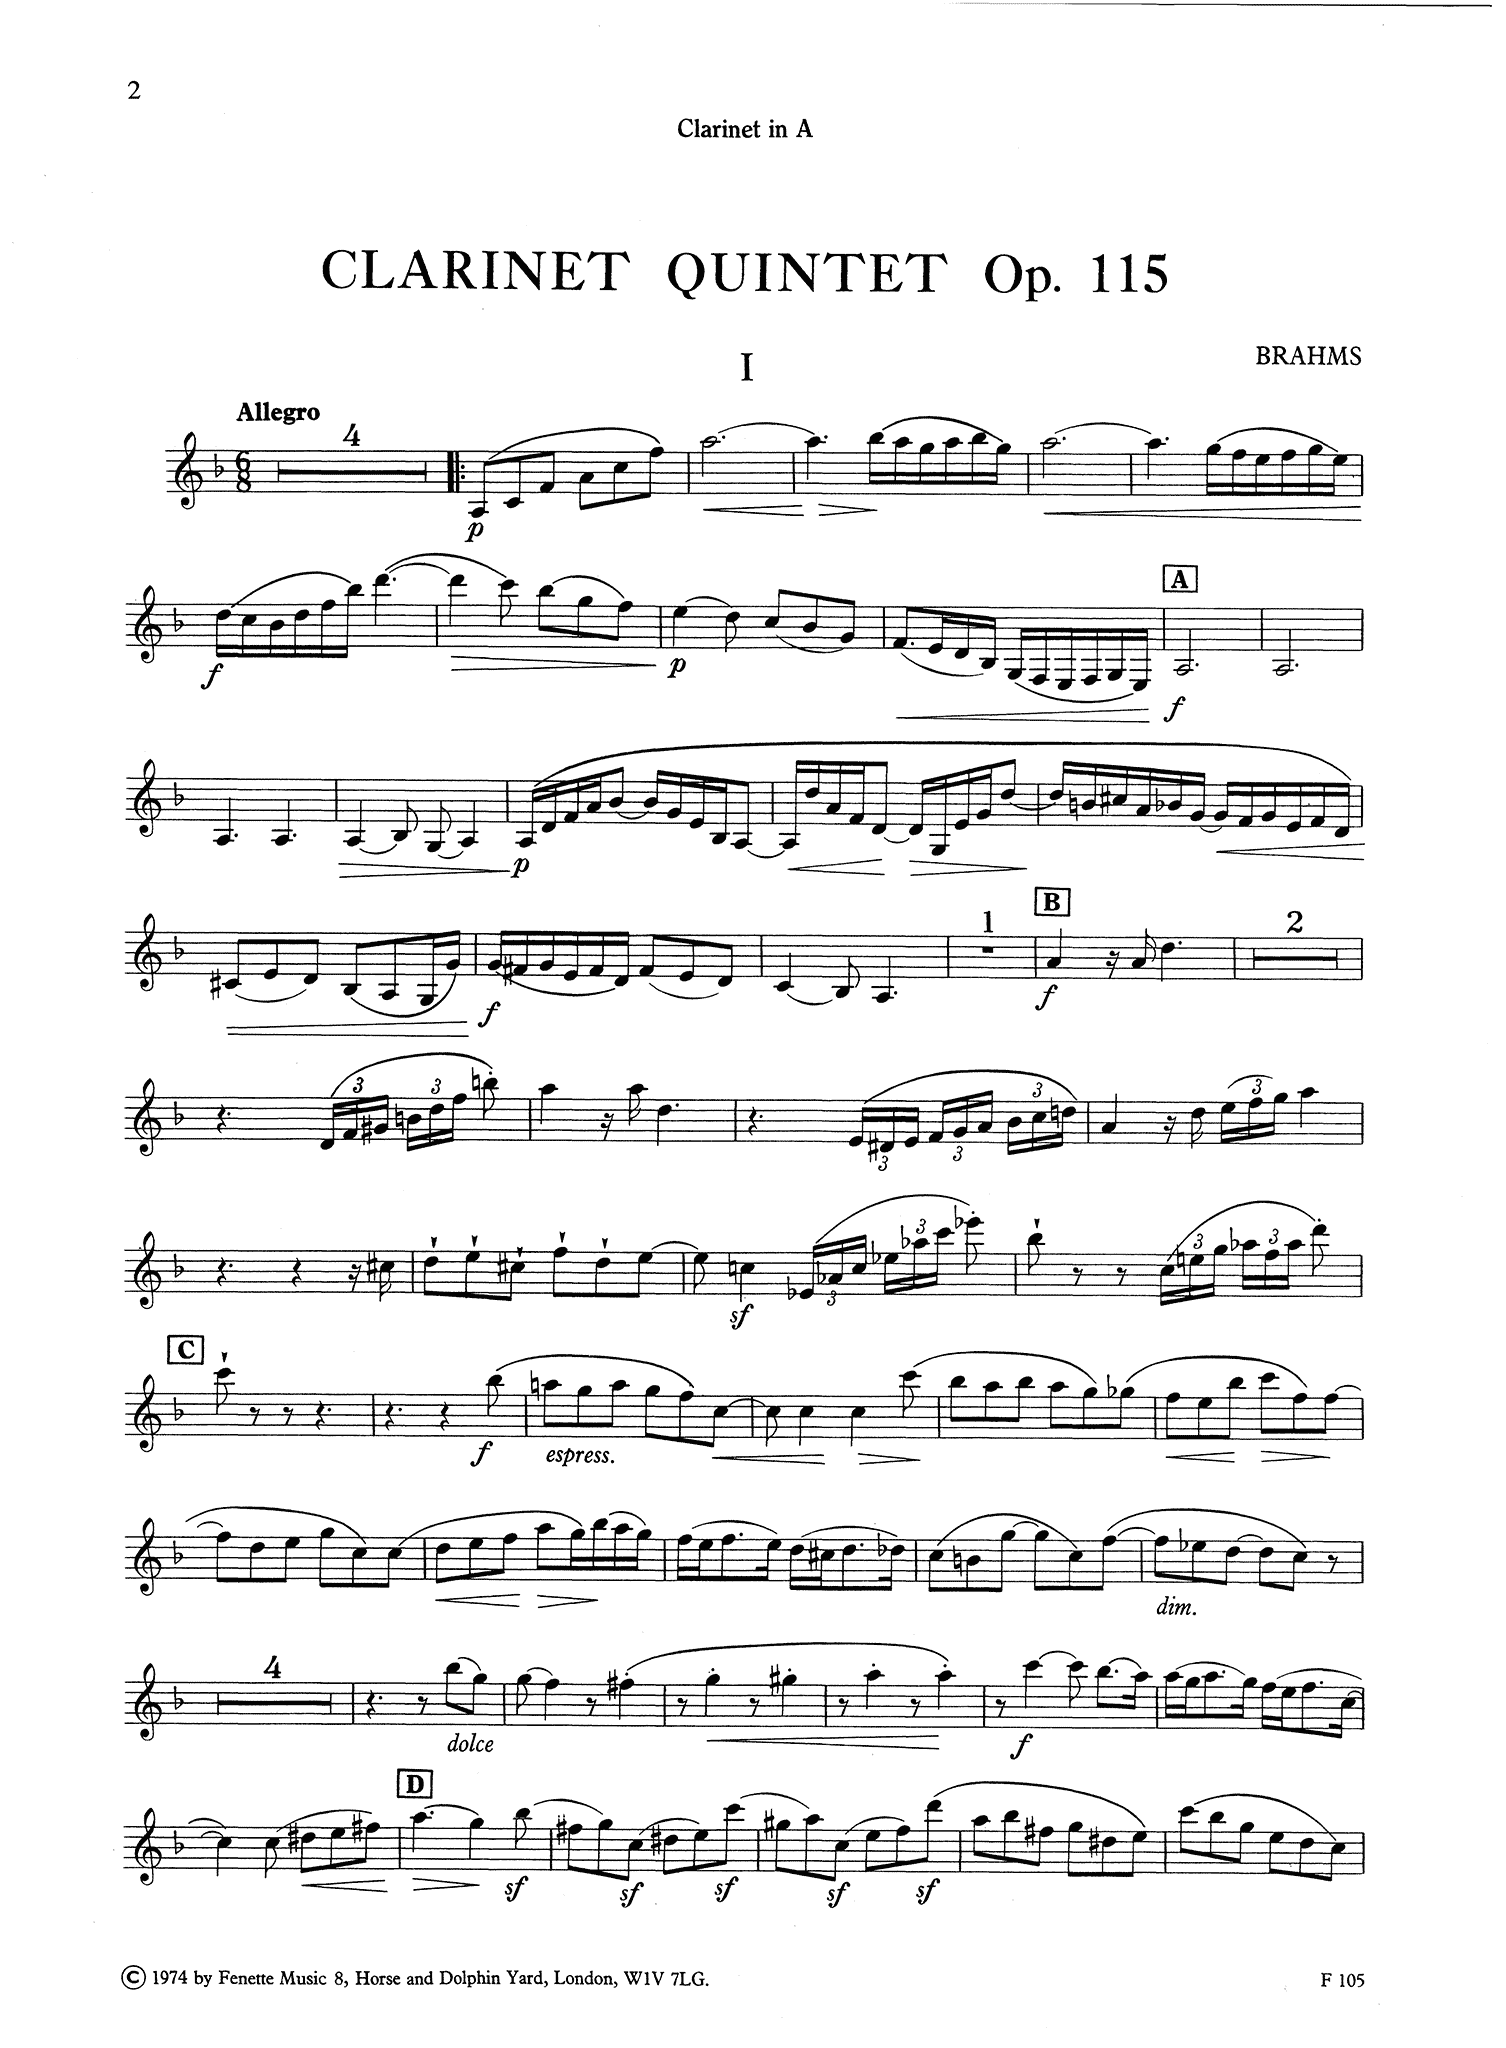 Clarinet Quintet, Op. 115 Clarinet part